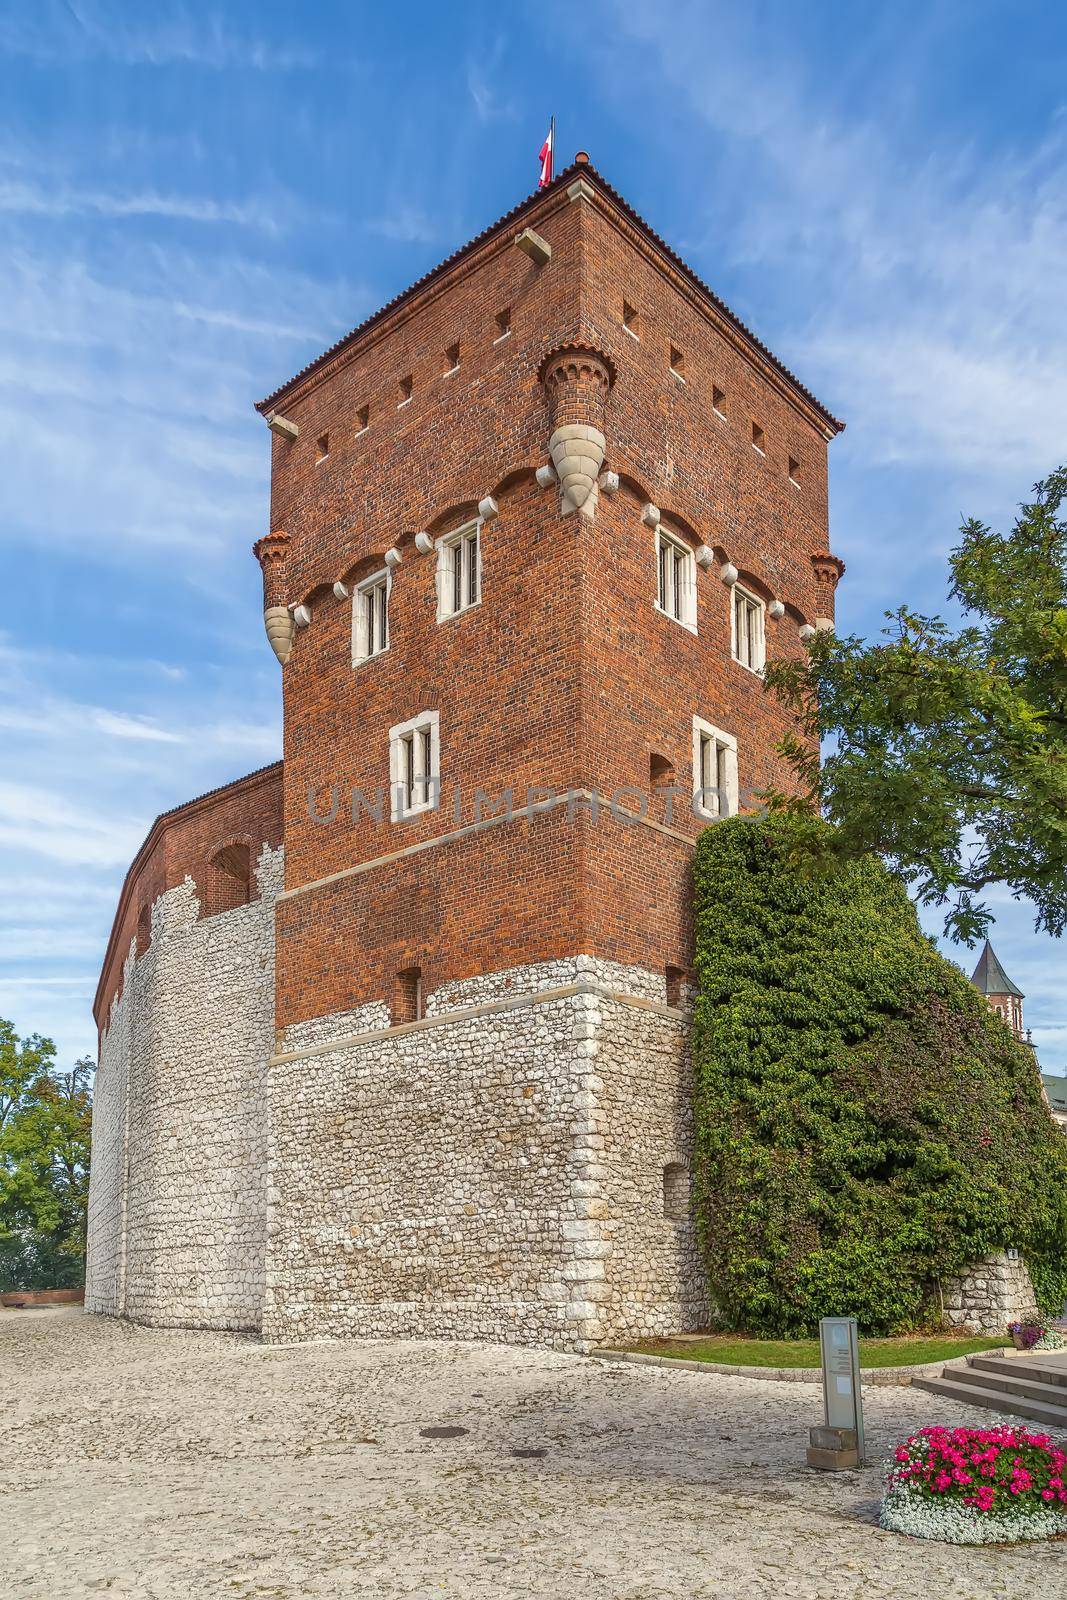 Thieves' Tower, Krakow, Poland by borisb17